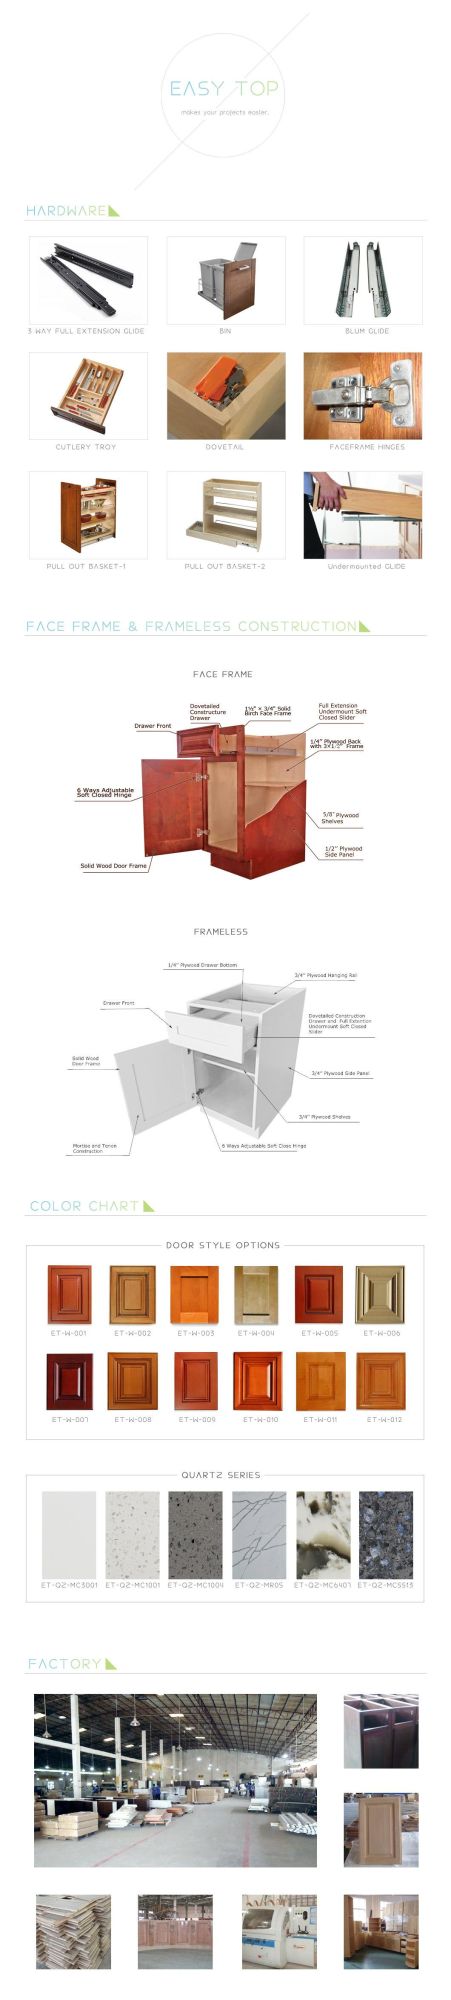 Custom Made Foshan Factory Supply Solid Wooden Cabinet Modern Kitchen Furniture